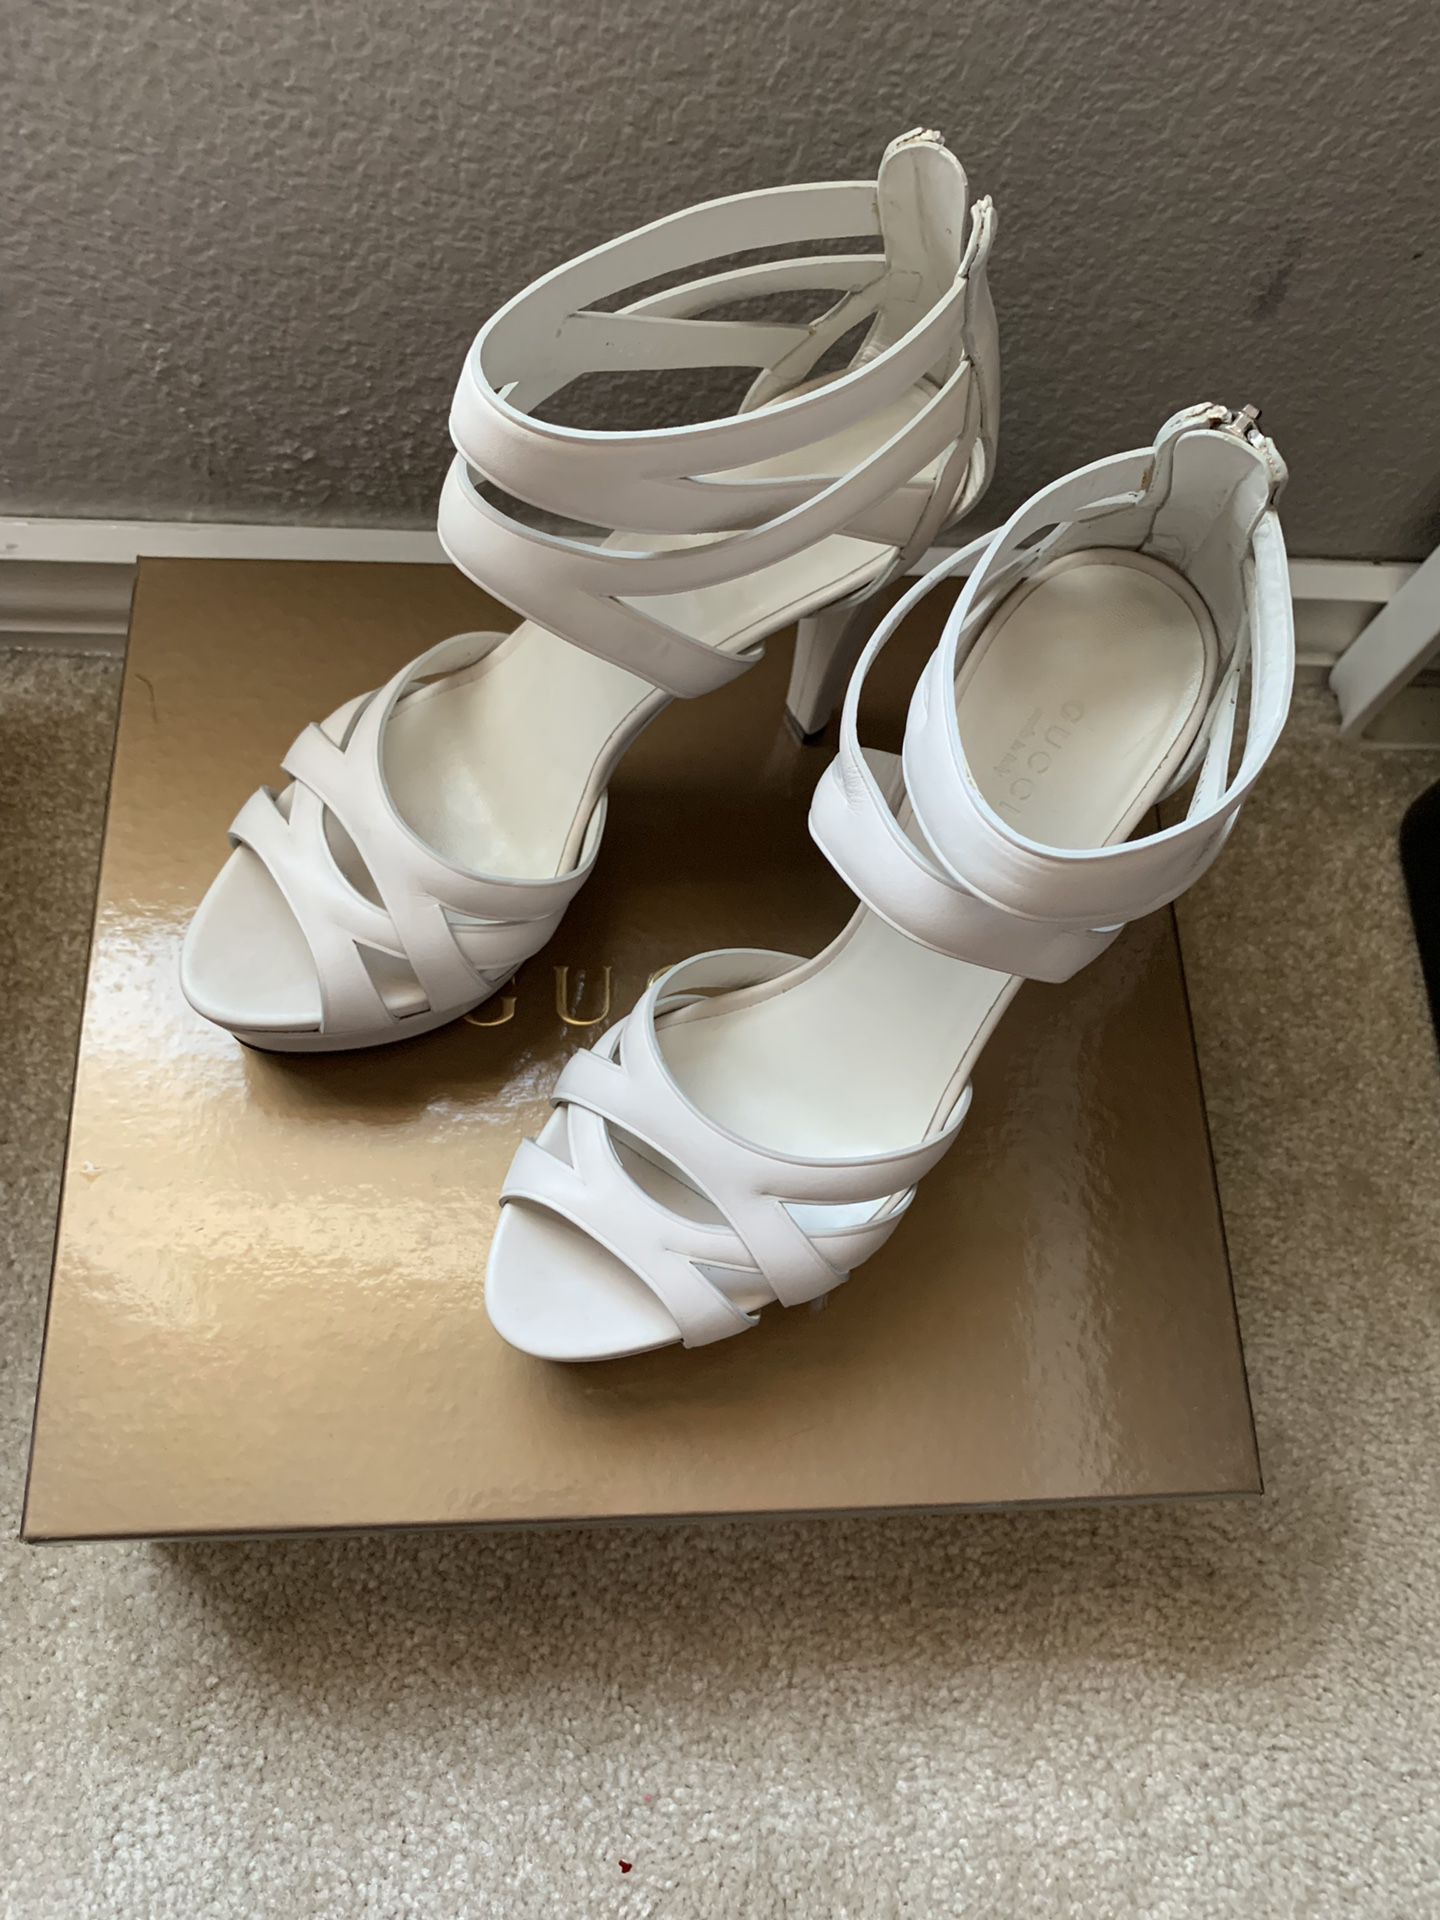 Gucci high heel platform shoes